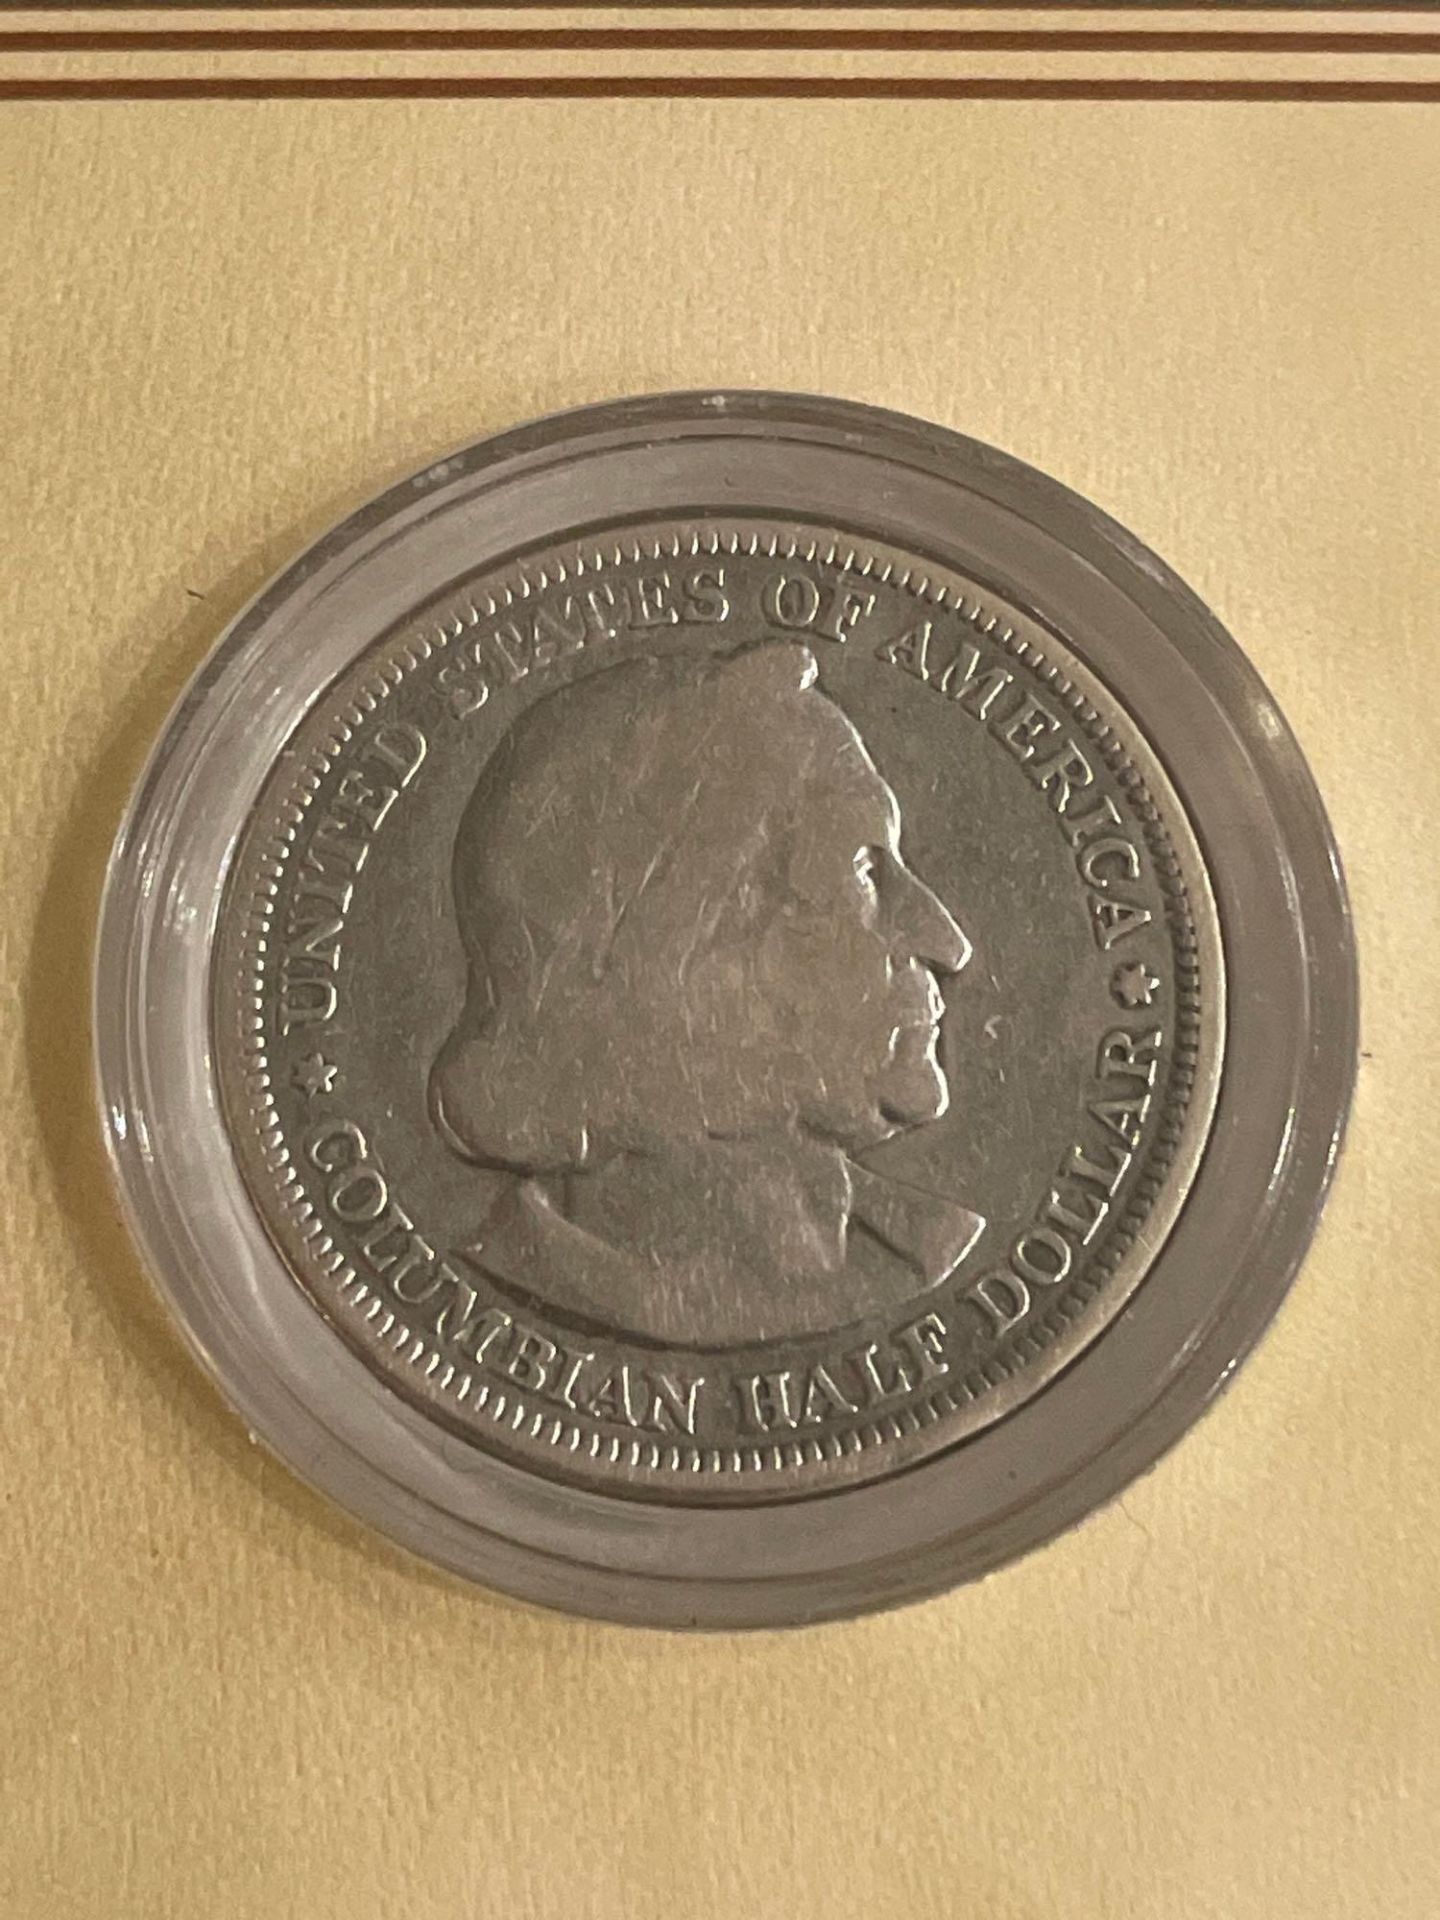 Columbian Exposition Commemorative Half Dollar: 1893 Silver Columbian Half Dollar - Image 5 of 5